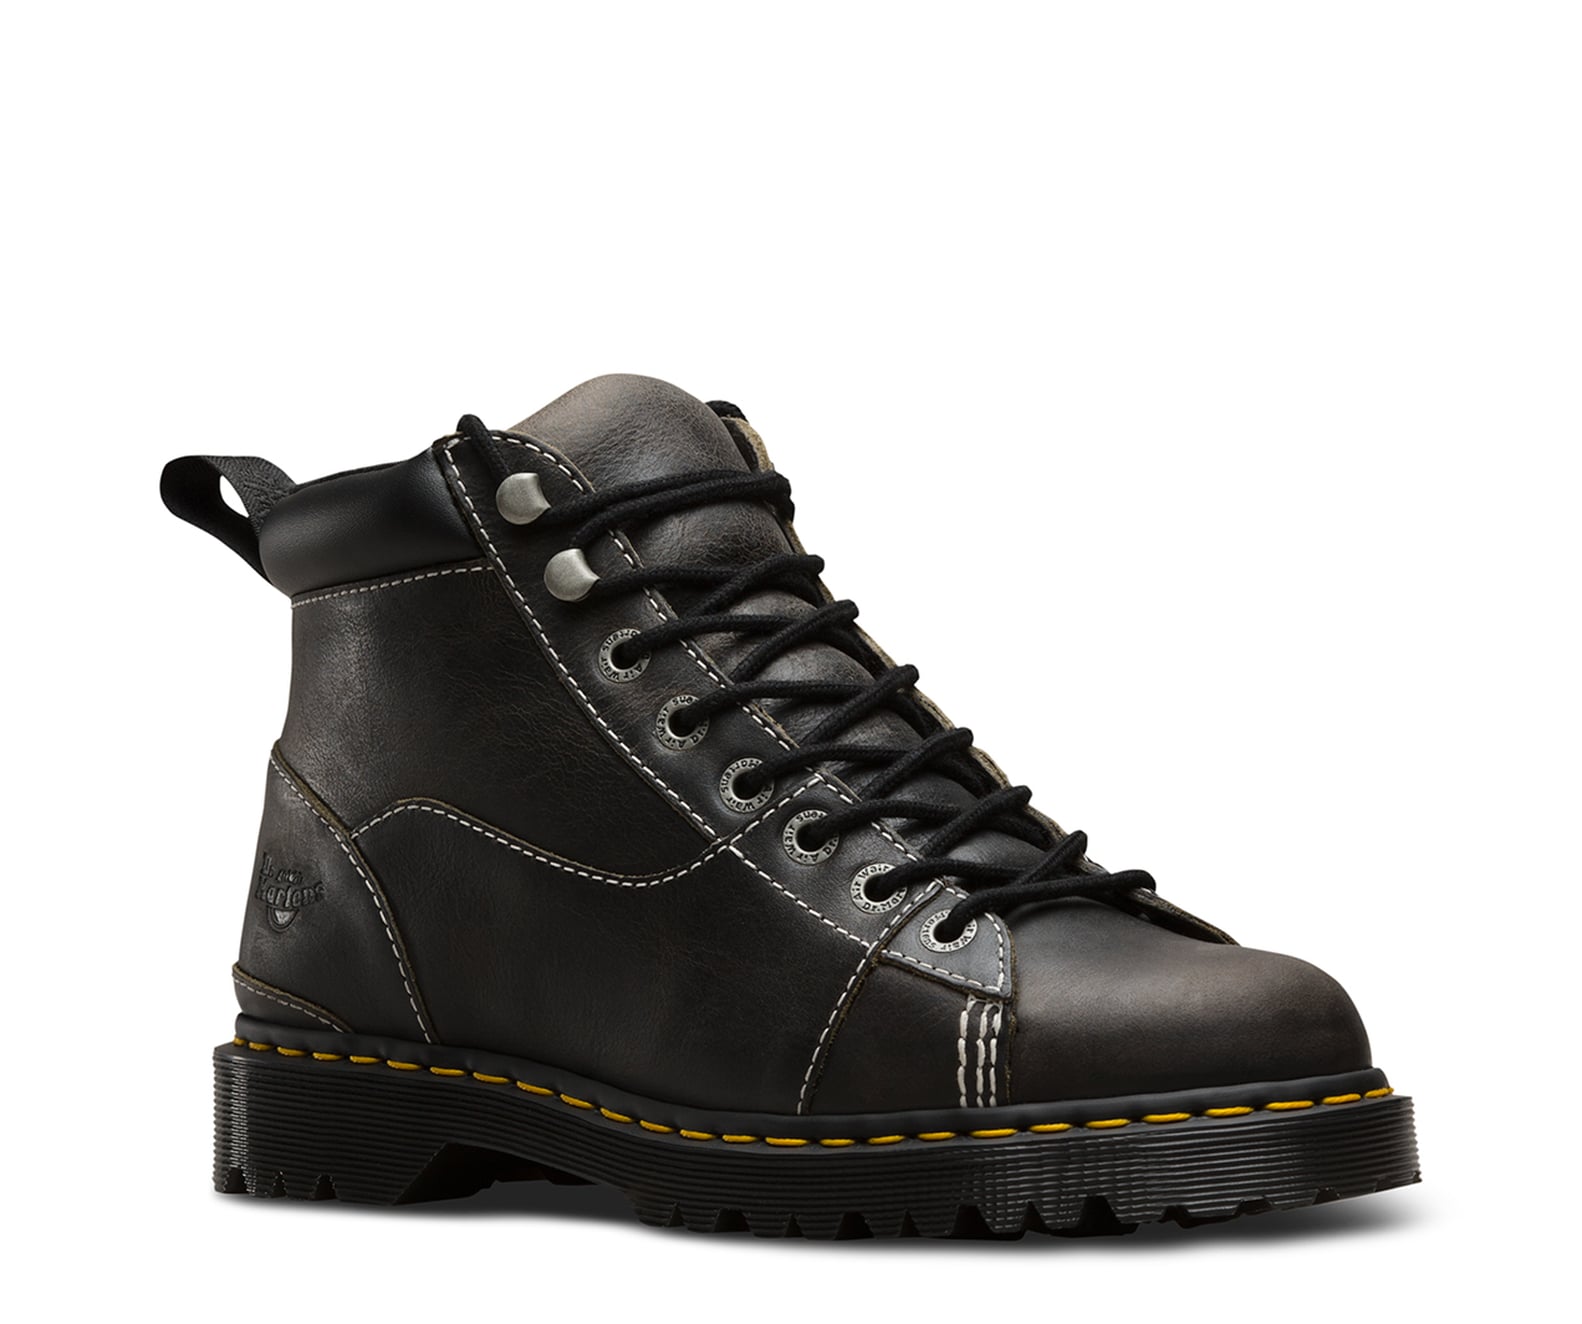 Gigi Hadid's Black Leather Sneakers | POPSUGAR Fashion